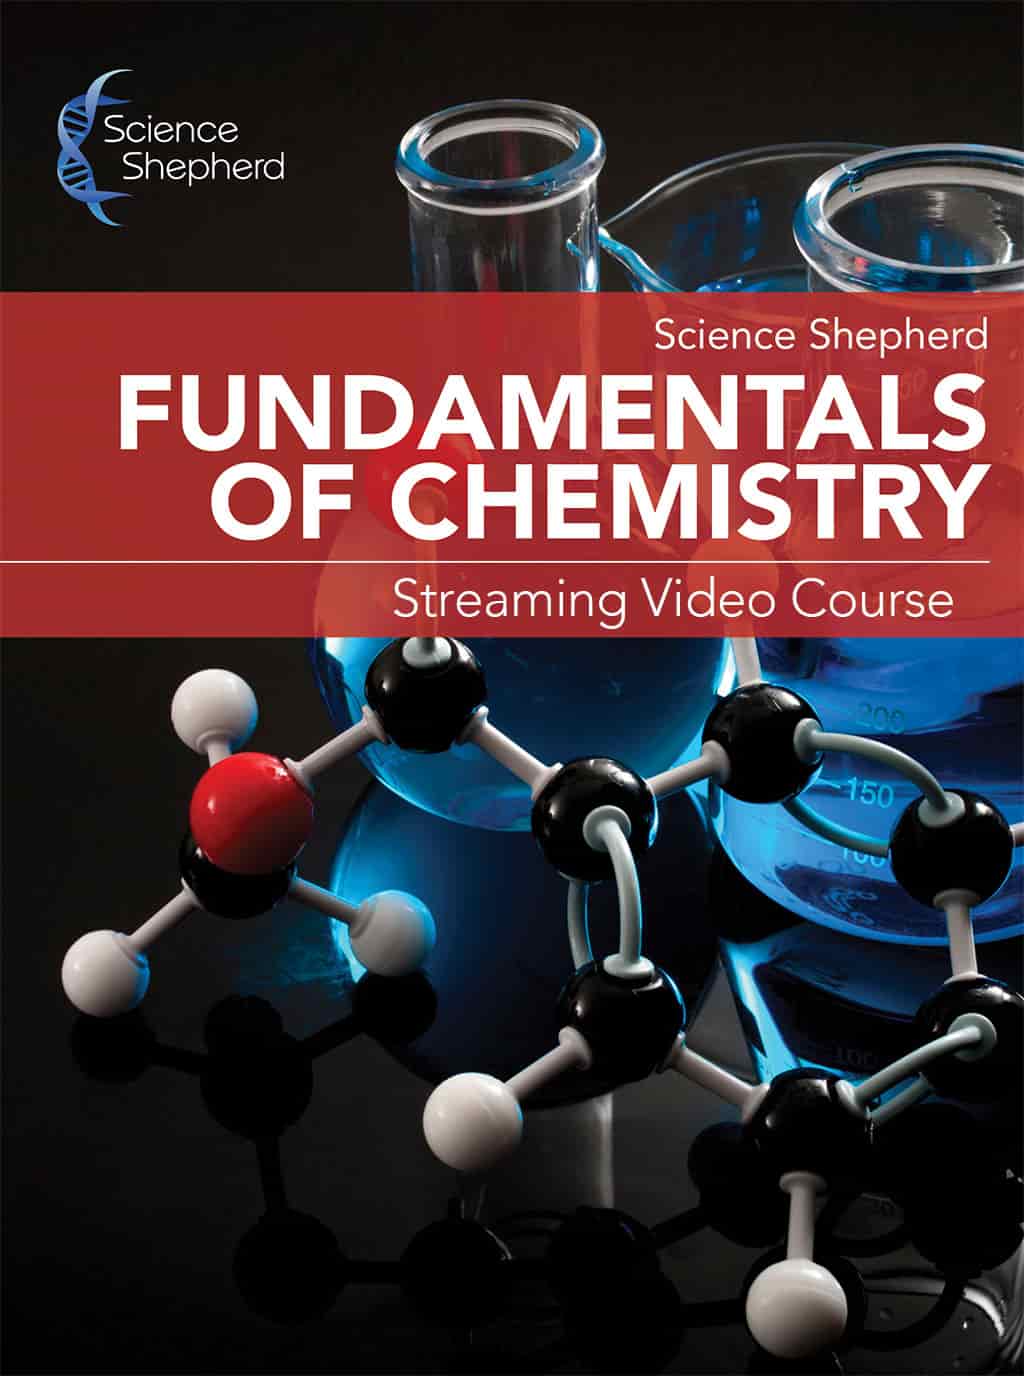 Fundamentals of Chemistry homeschool videos cover